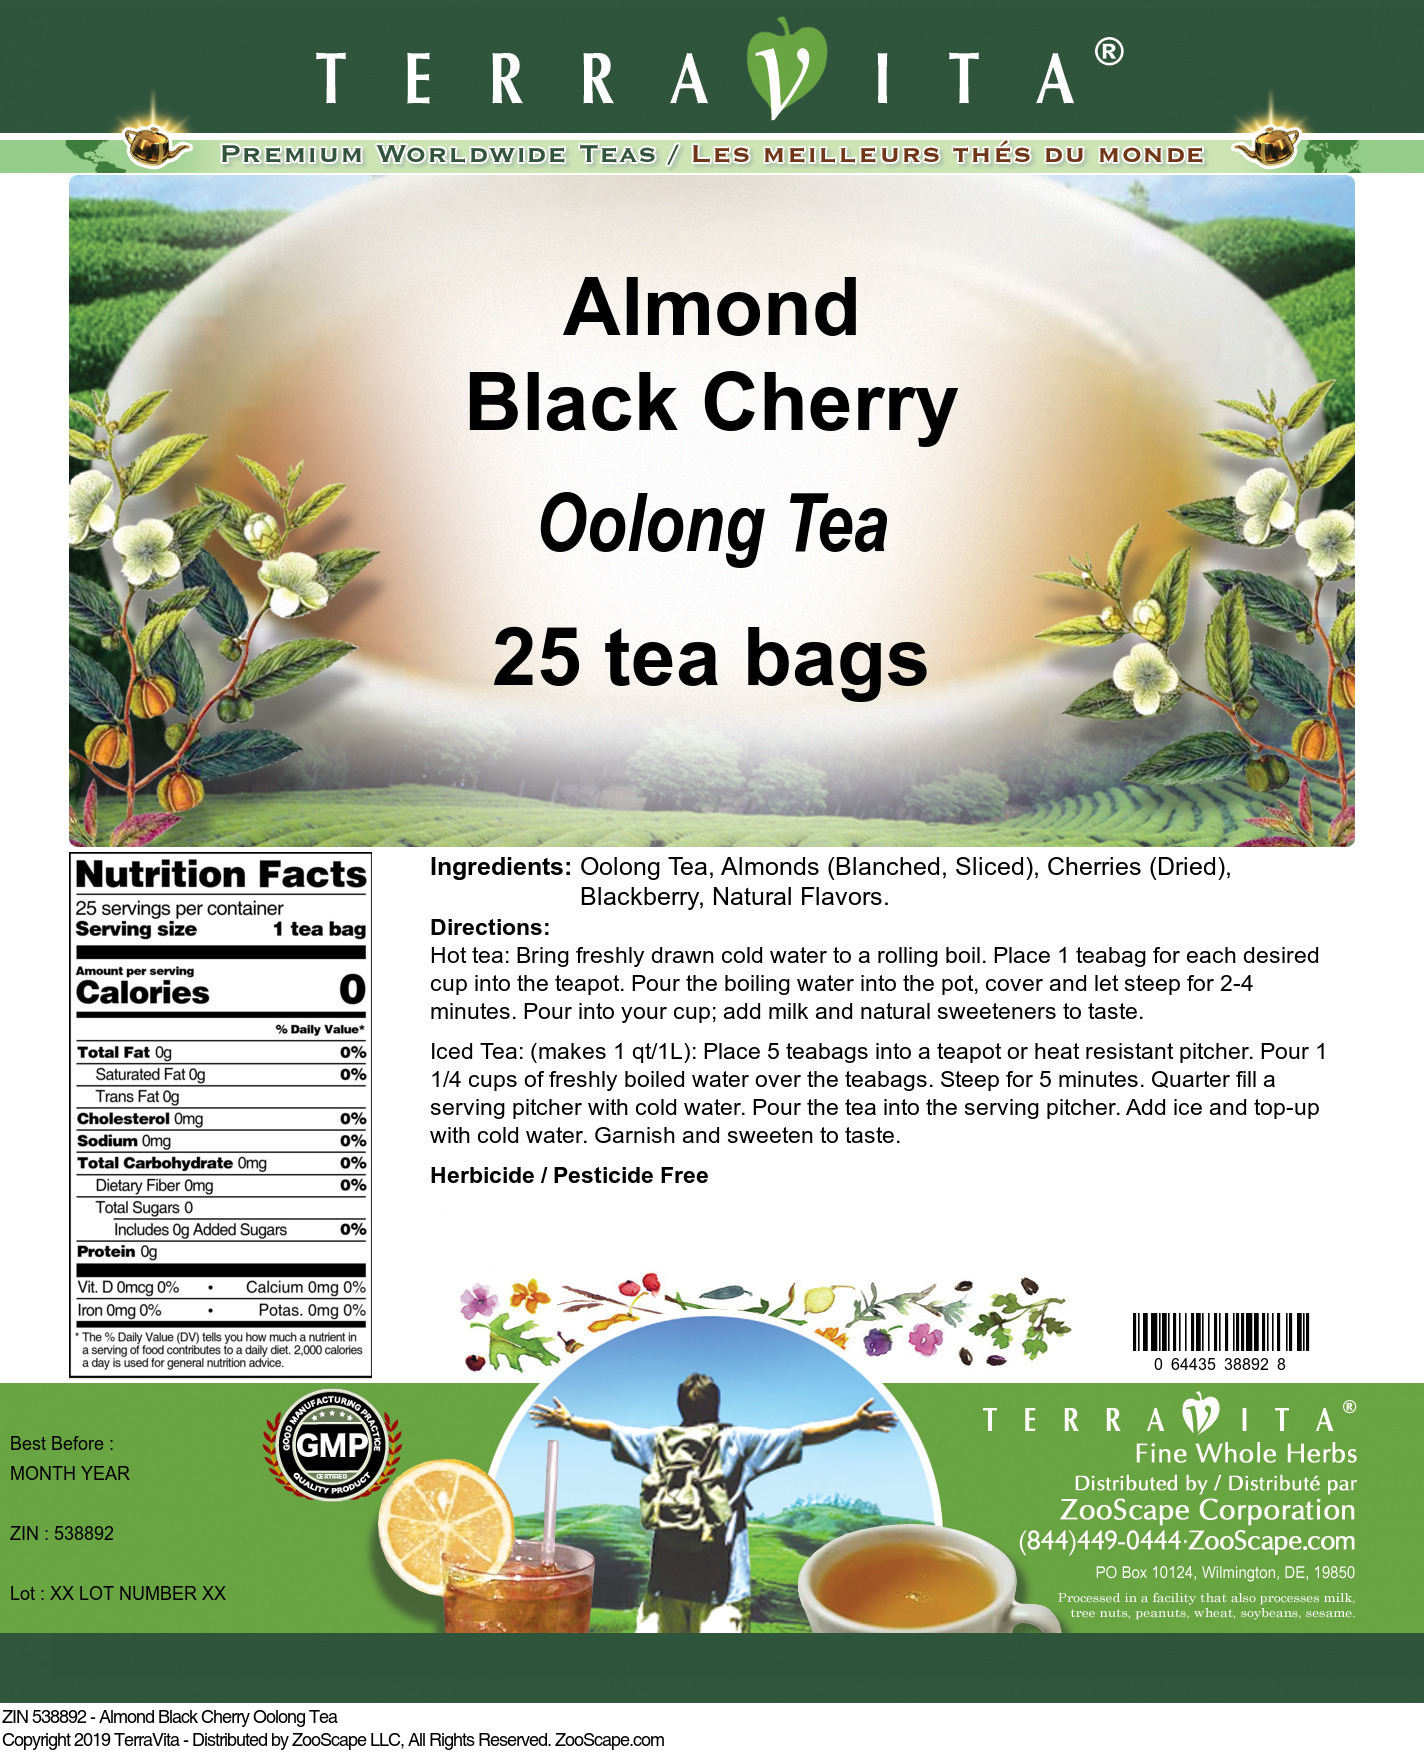 Almond Black Cherry Oolong Tea - Label